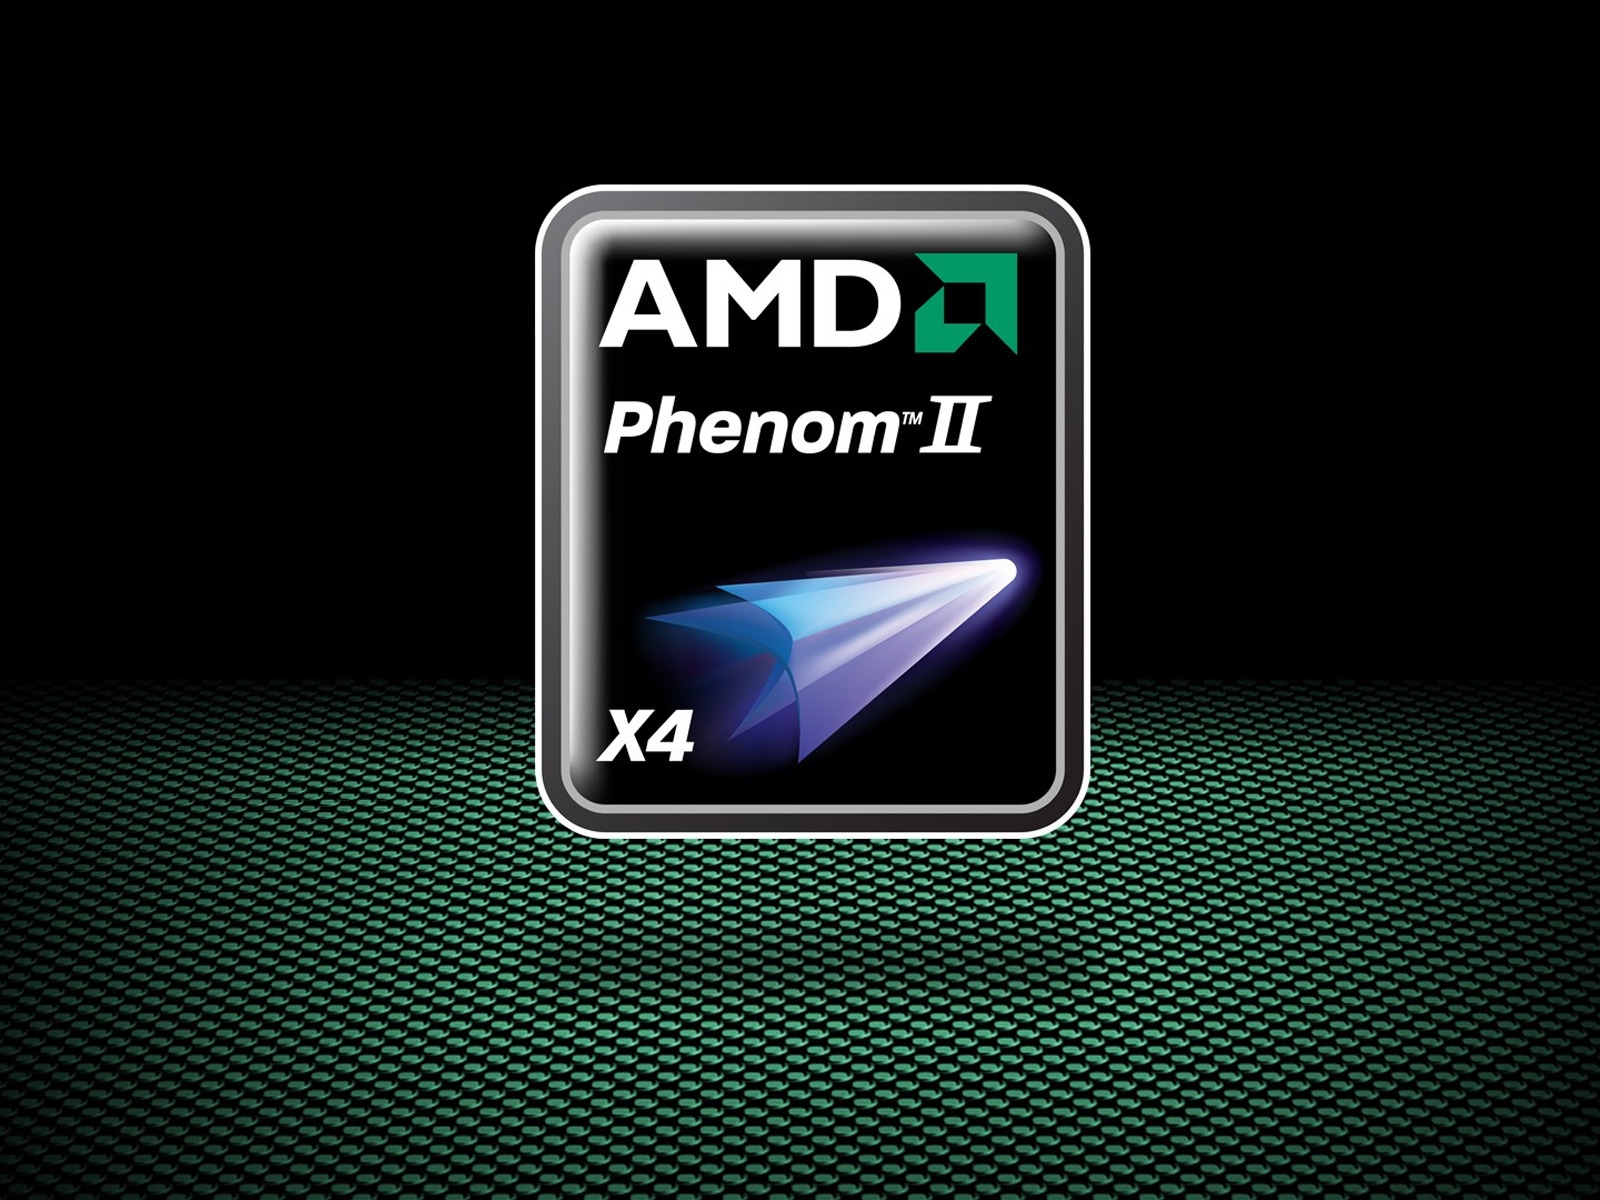 AMD Phenom II for 1600 x 1200 resolution